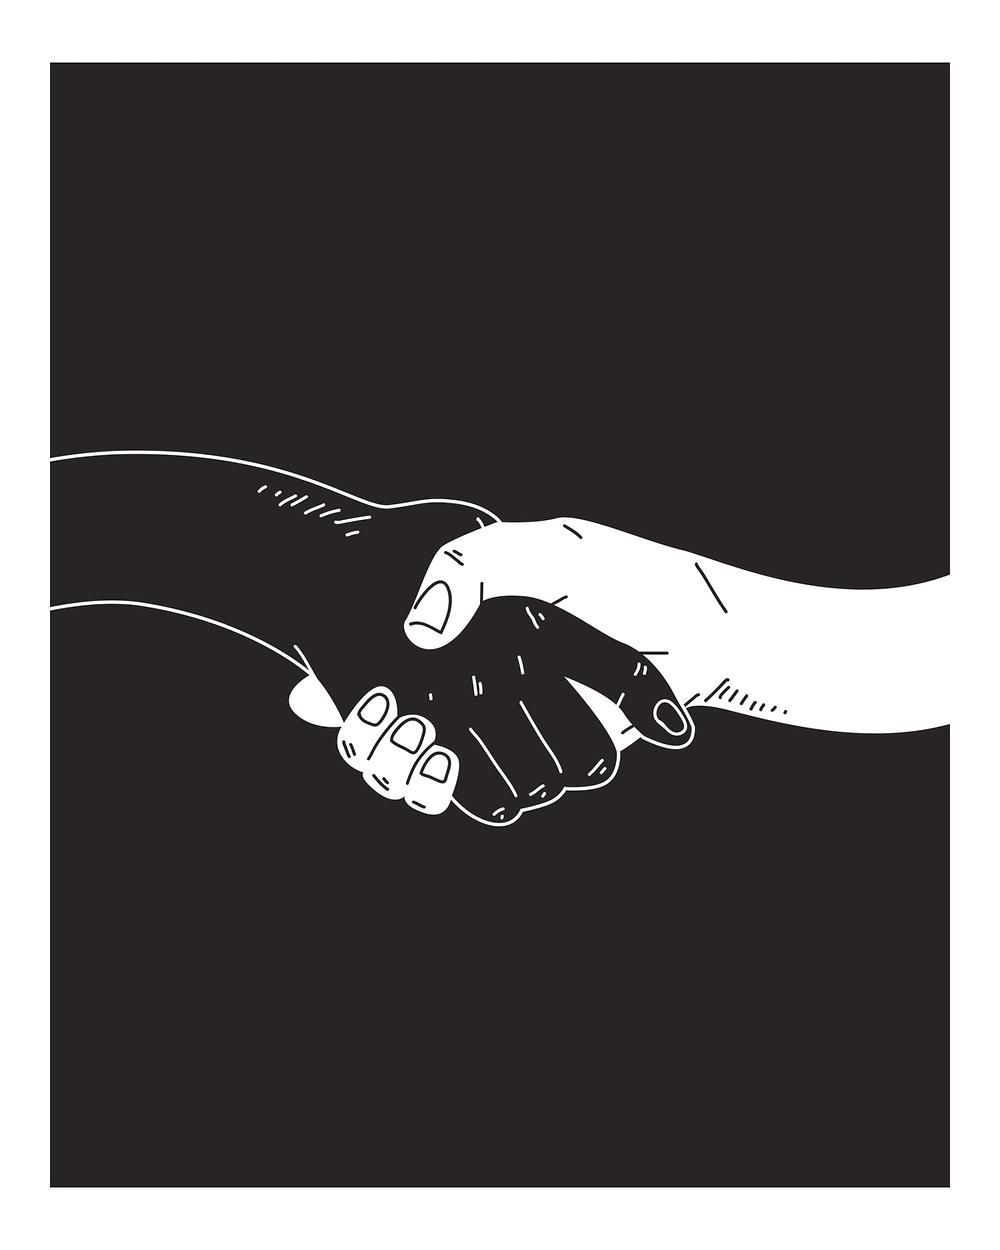 A handshake between two people on black background - 